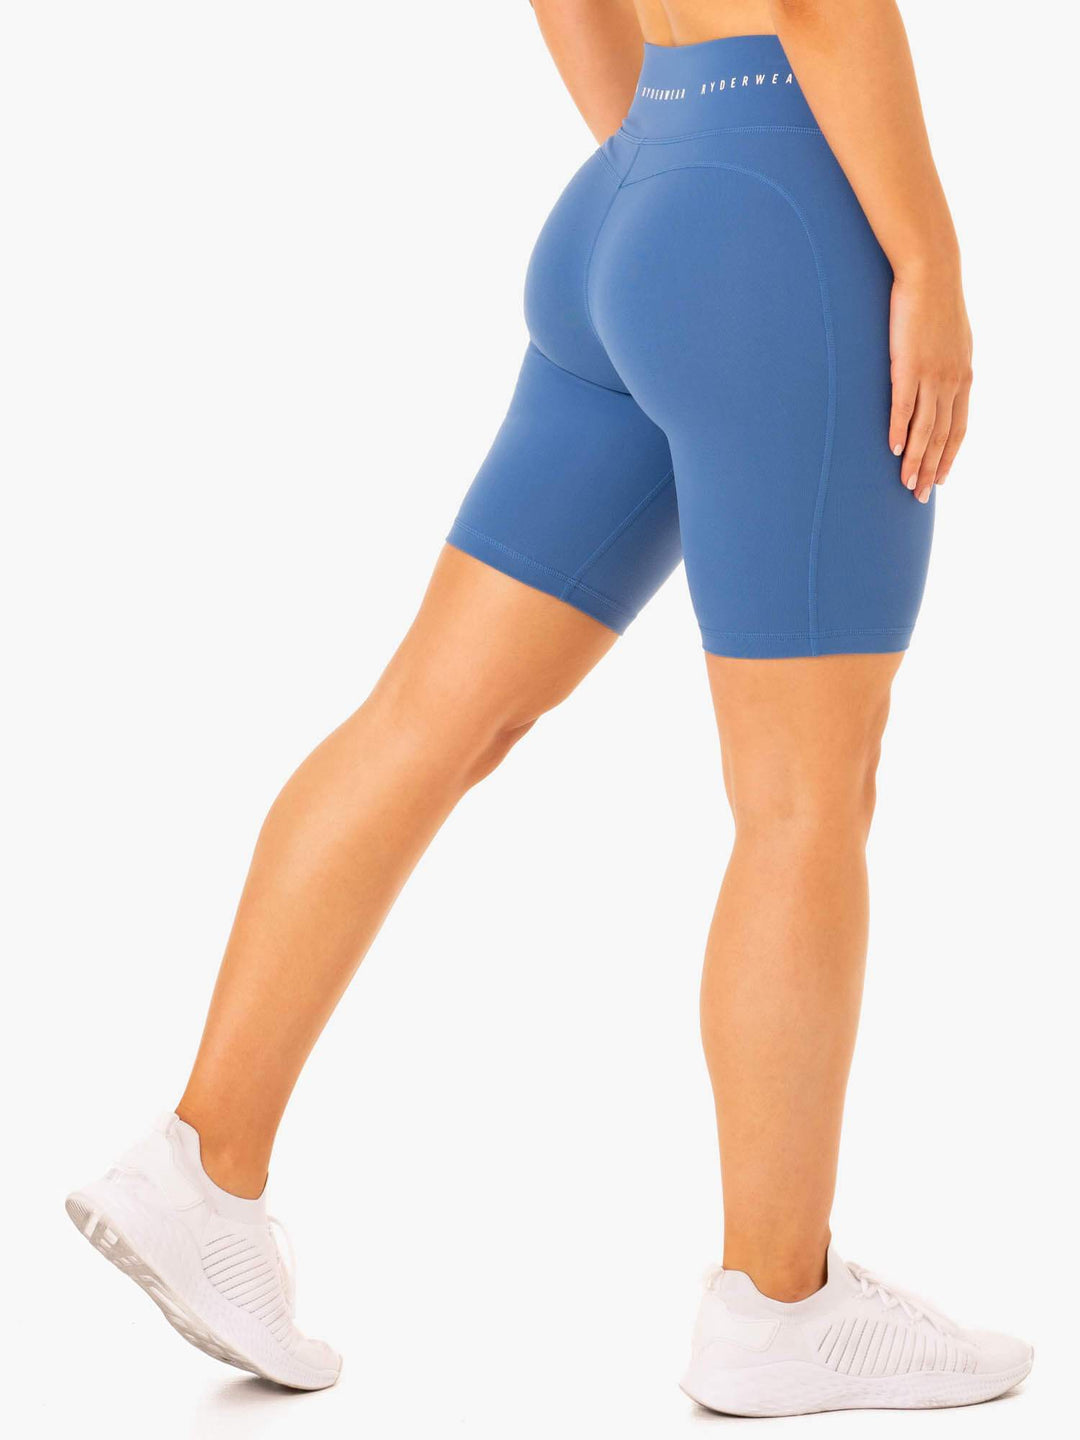 Reflex High Waisted Bike Shorts - Blue Clothing Ryderwear 